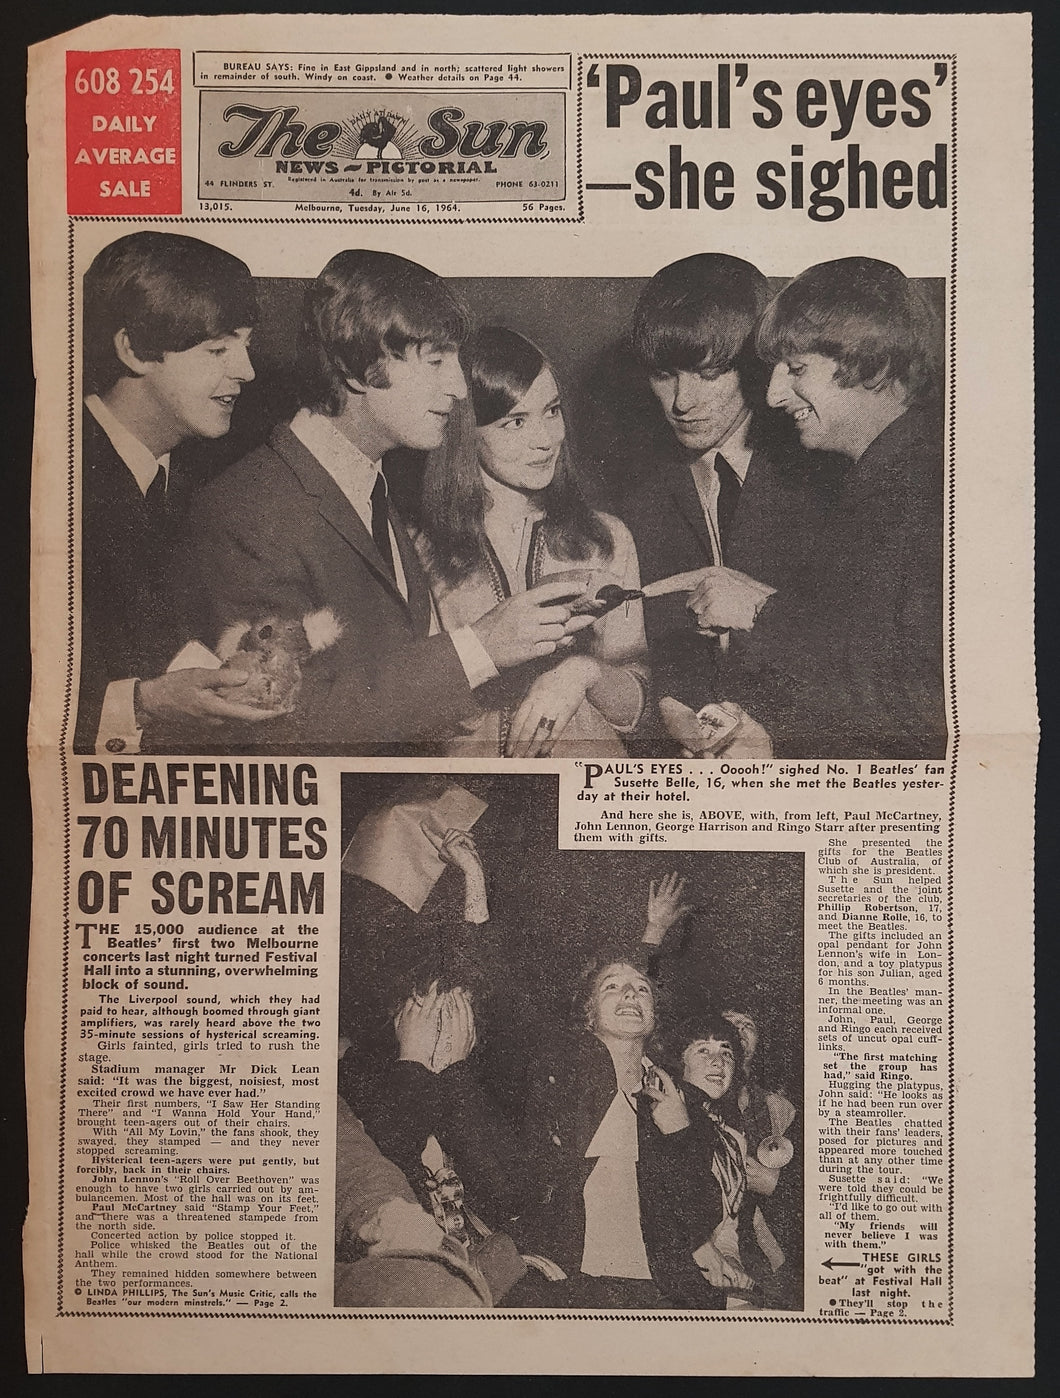 Beatles - The Sun Melbourne June 16, 1964